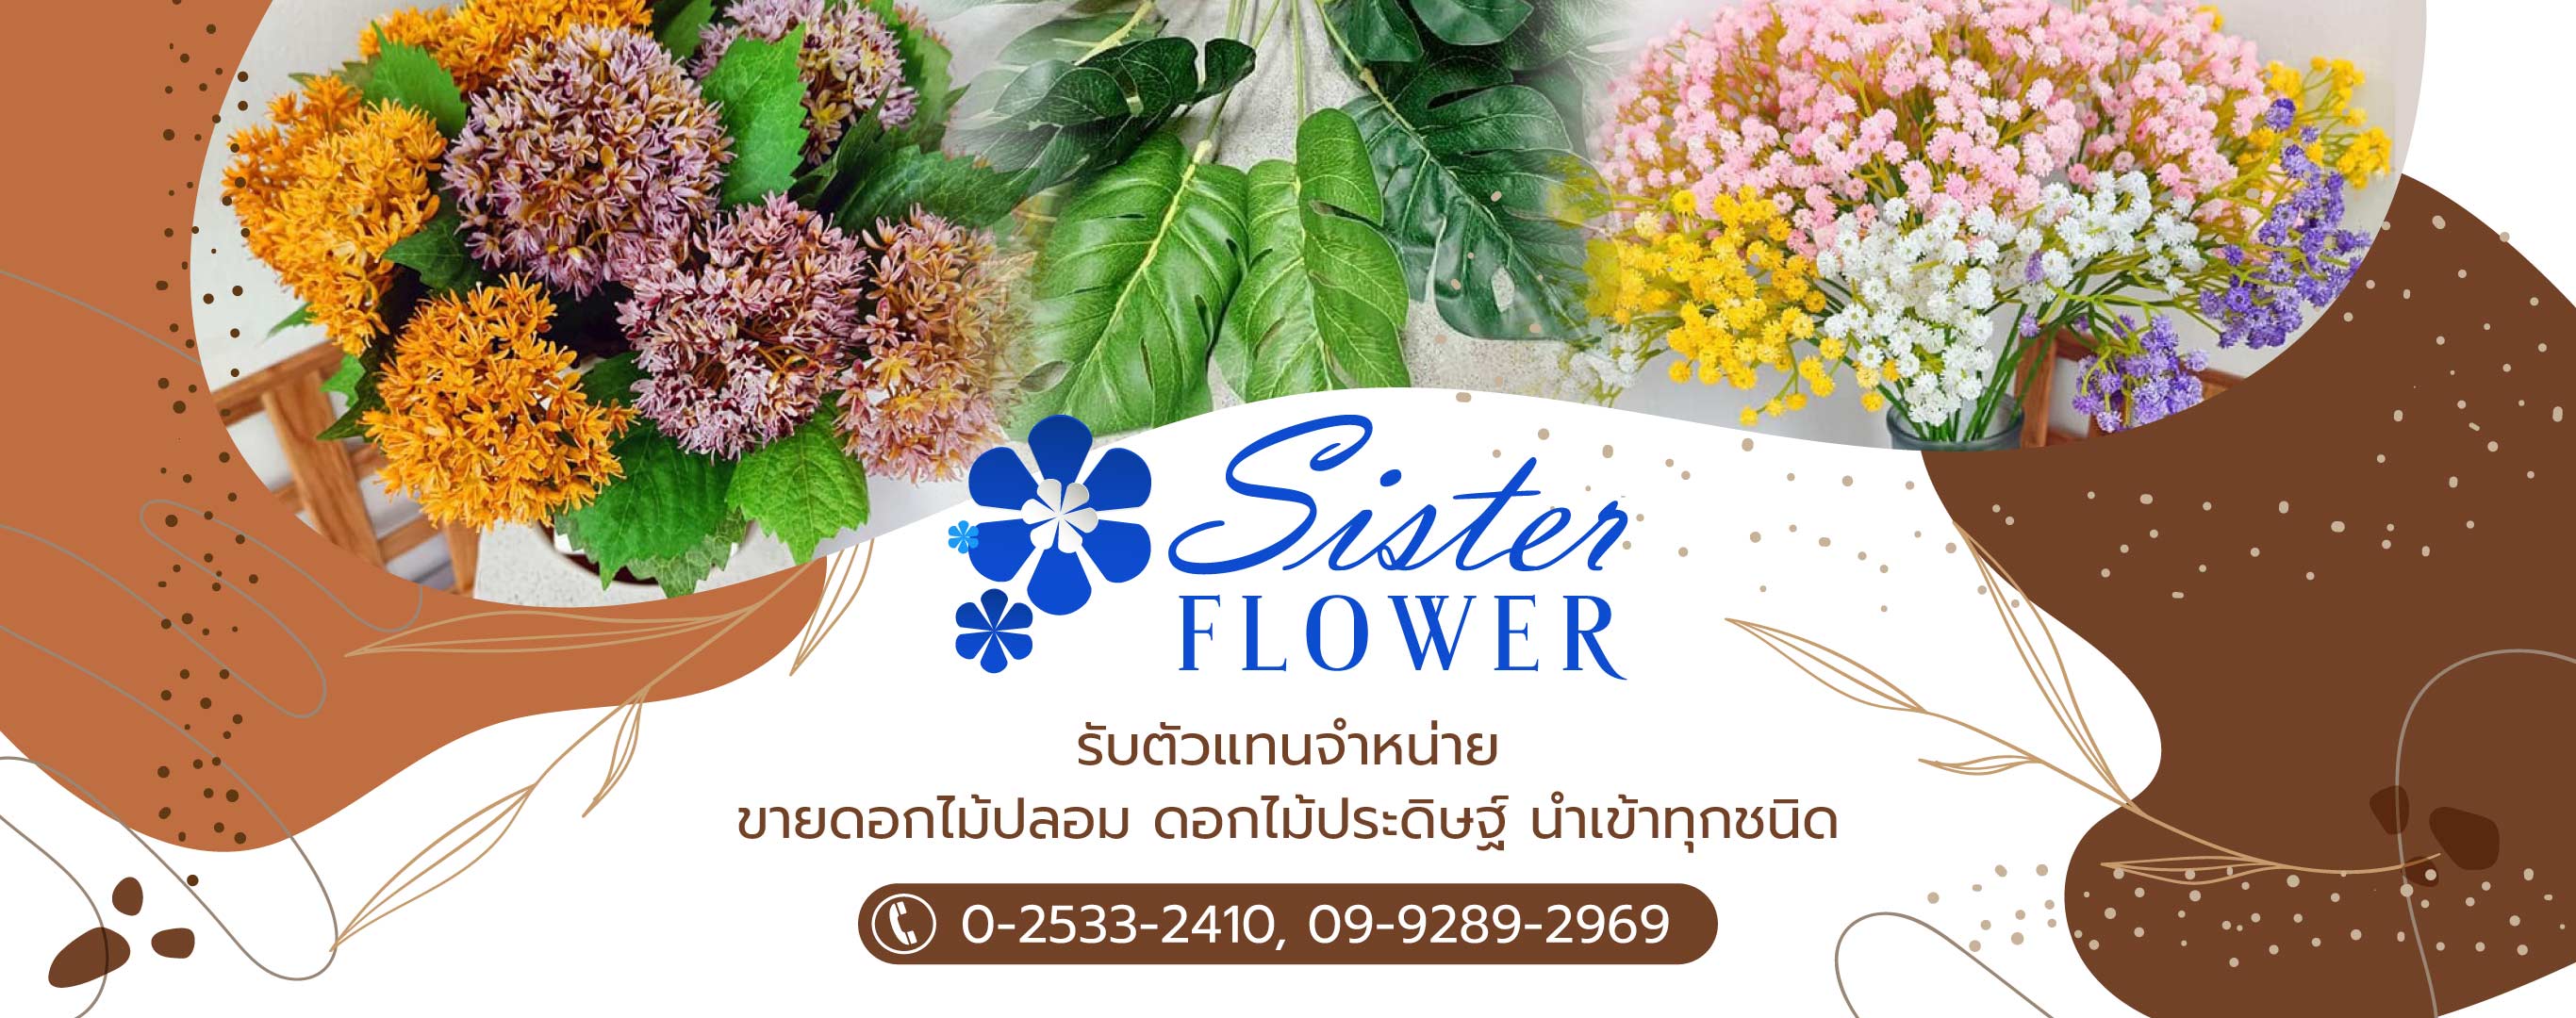 sisterflower แหล่งขายปลีกส่งดอกไม้ปลอม